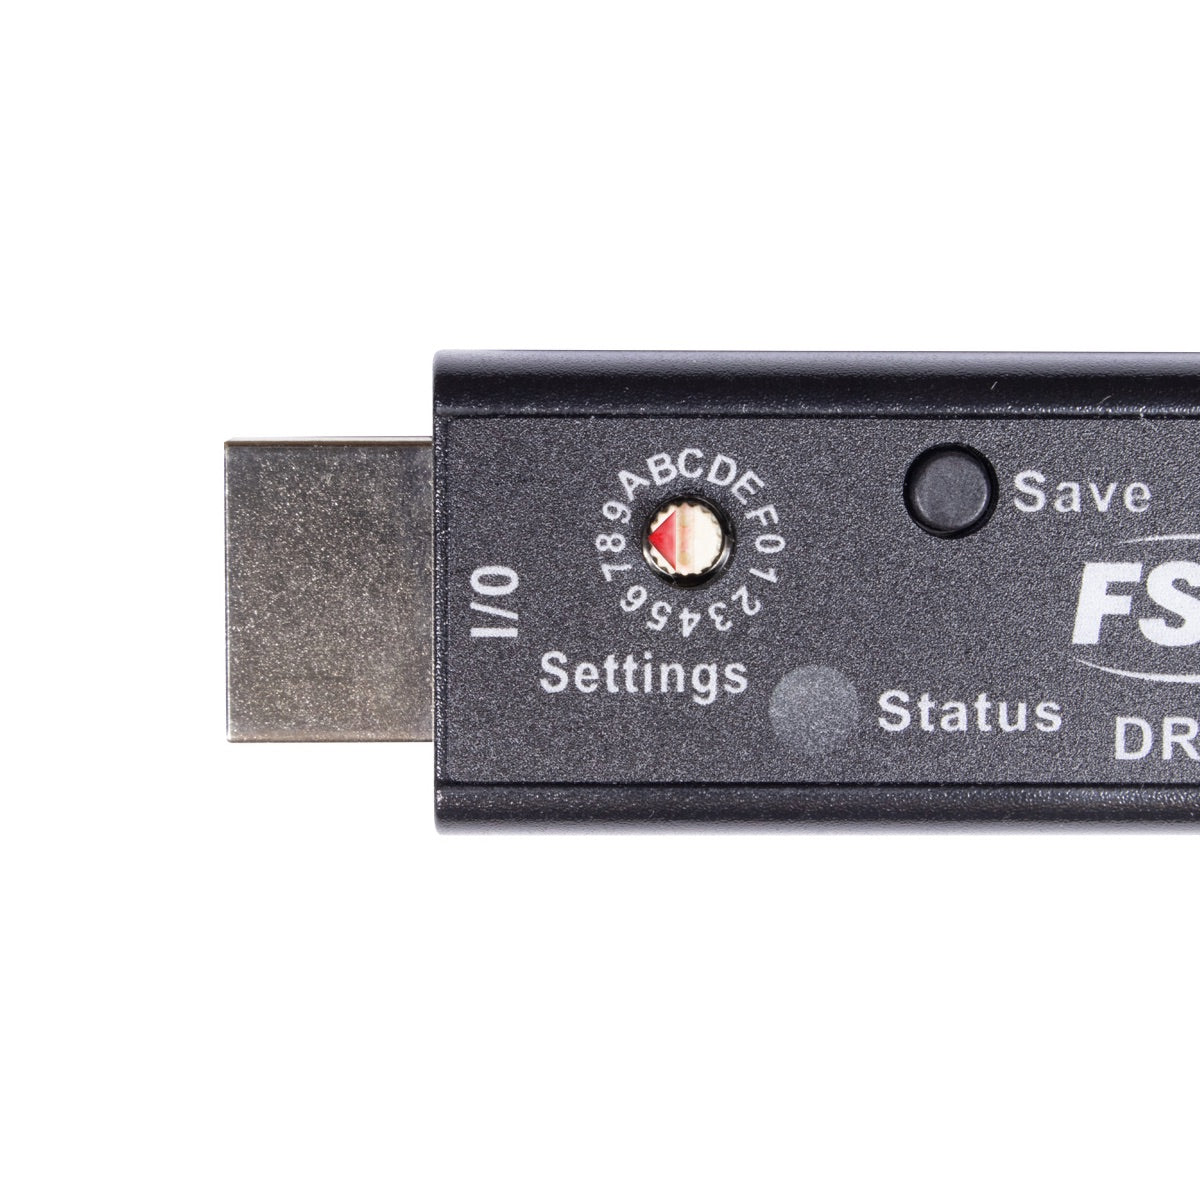 FSR DR-EDID2 - Extended Display Identification Data Emulator, top